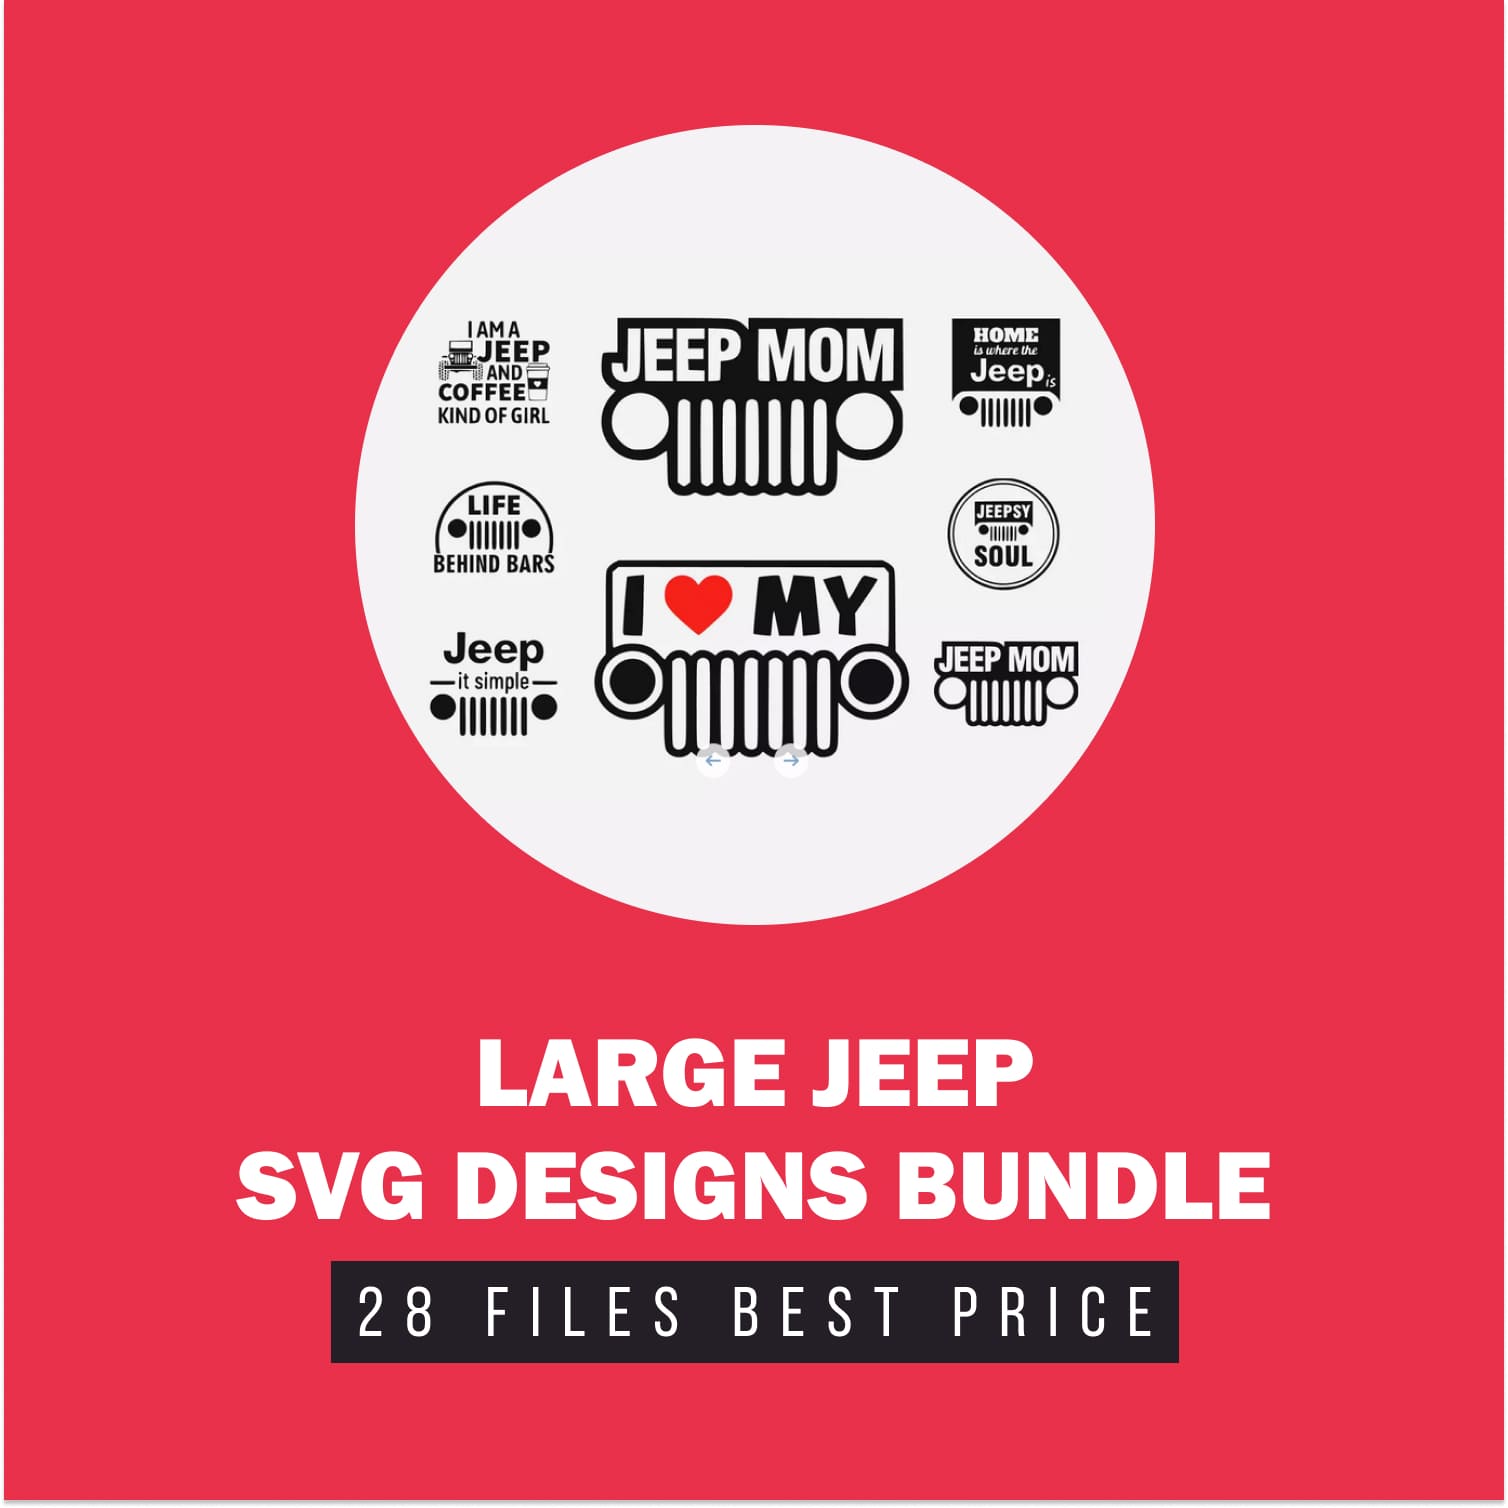 Large Jeep SVG Designs Bundle: 28 Files Best Price.